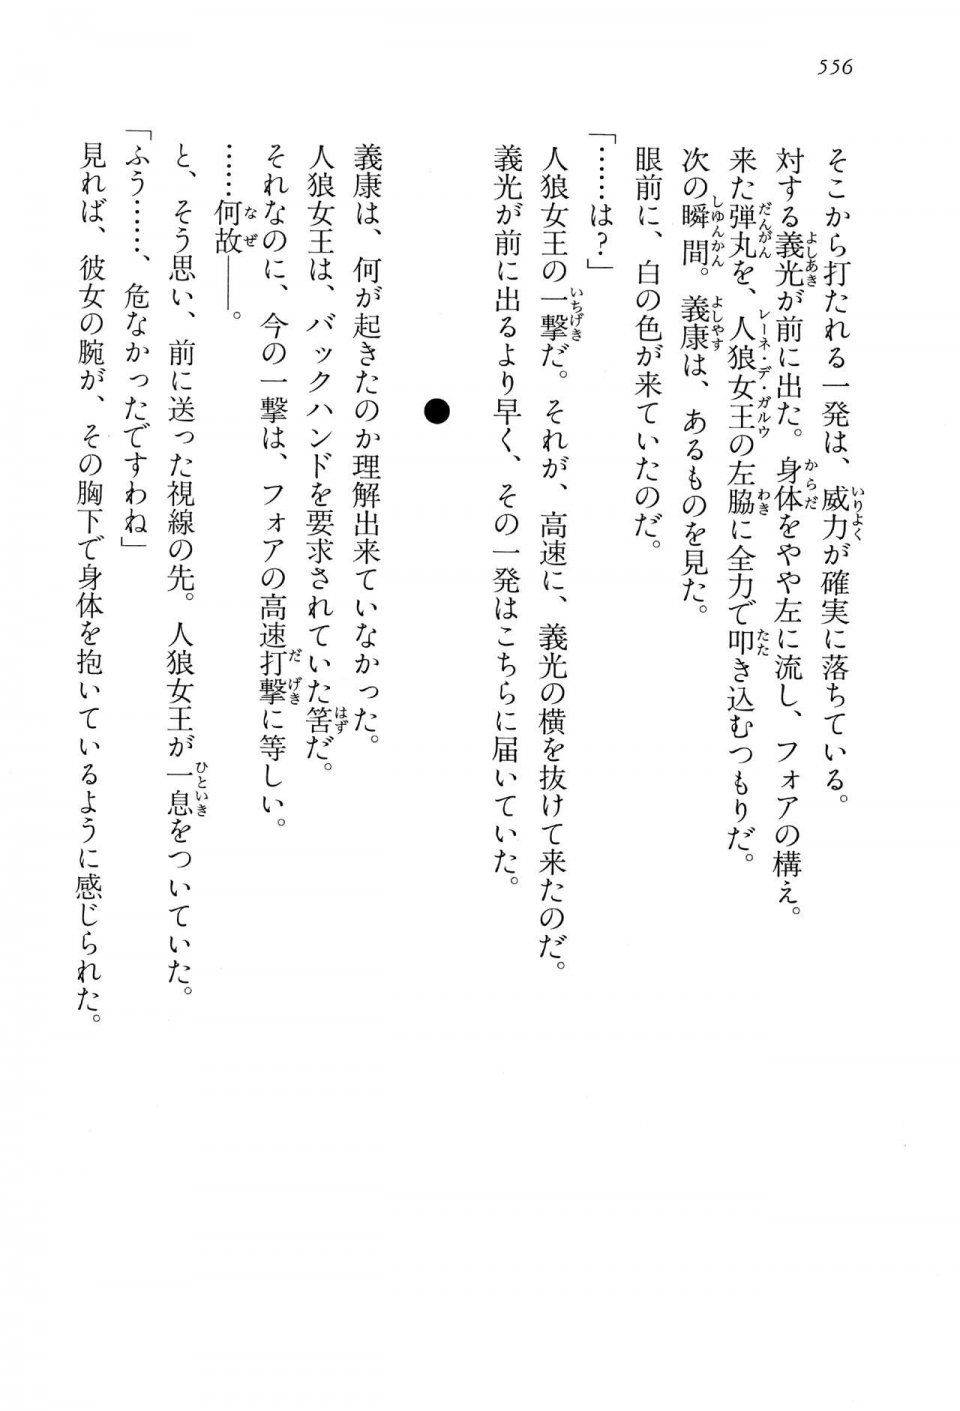 Kyoukai Senjou no Horizon LN Vol 15(6C) Part 2 - Photo #26